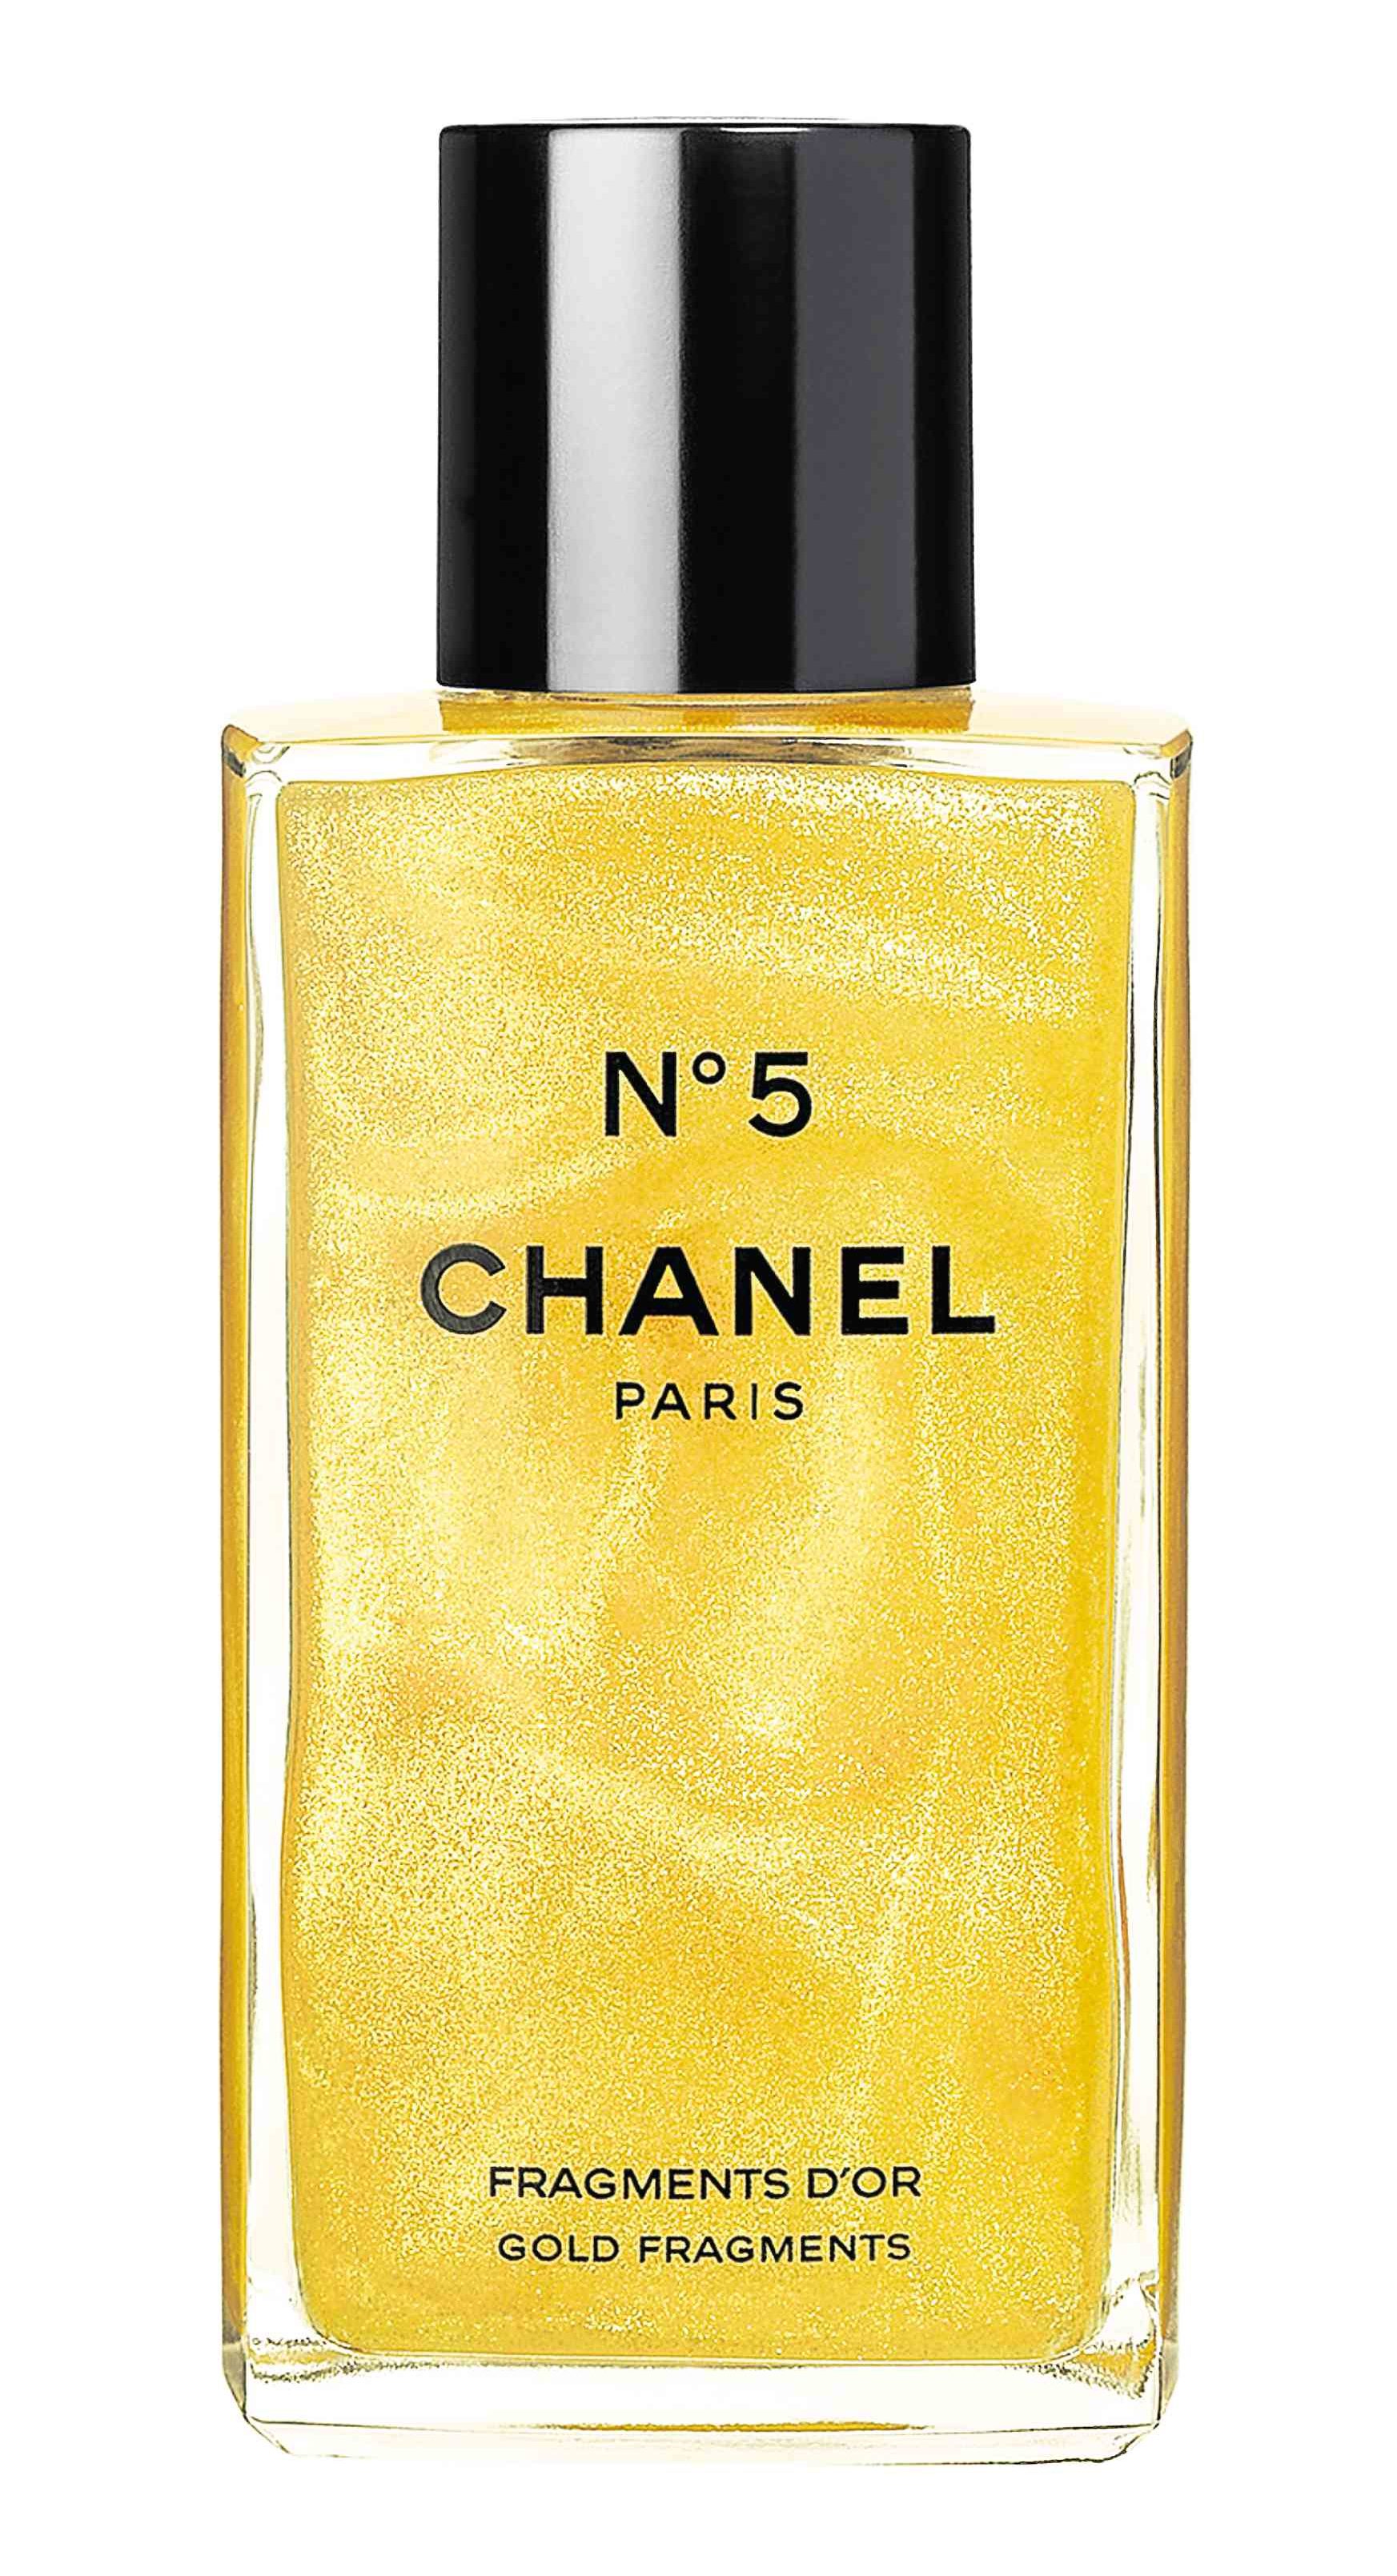 Chanel gel. Шанель блеск для тела. Chanel мерцающий гель для тела. Гель для тела Шанель 5. Гель для тела Chanel 5 с блестками.